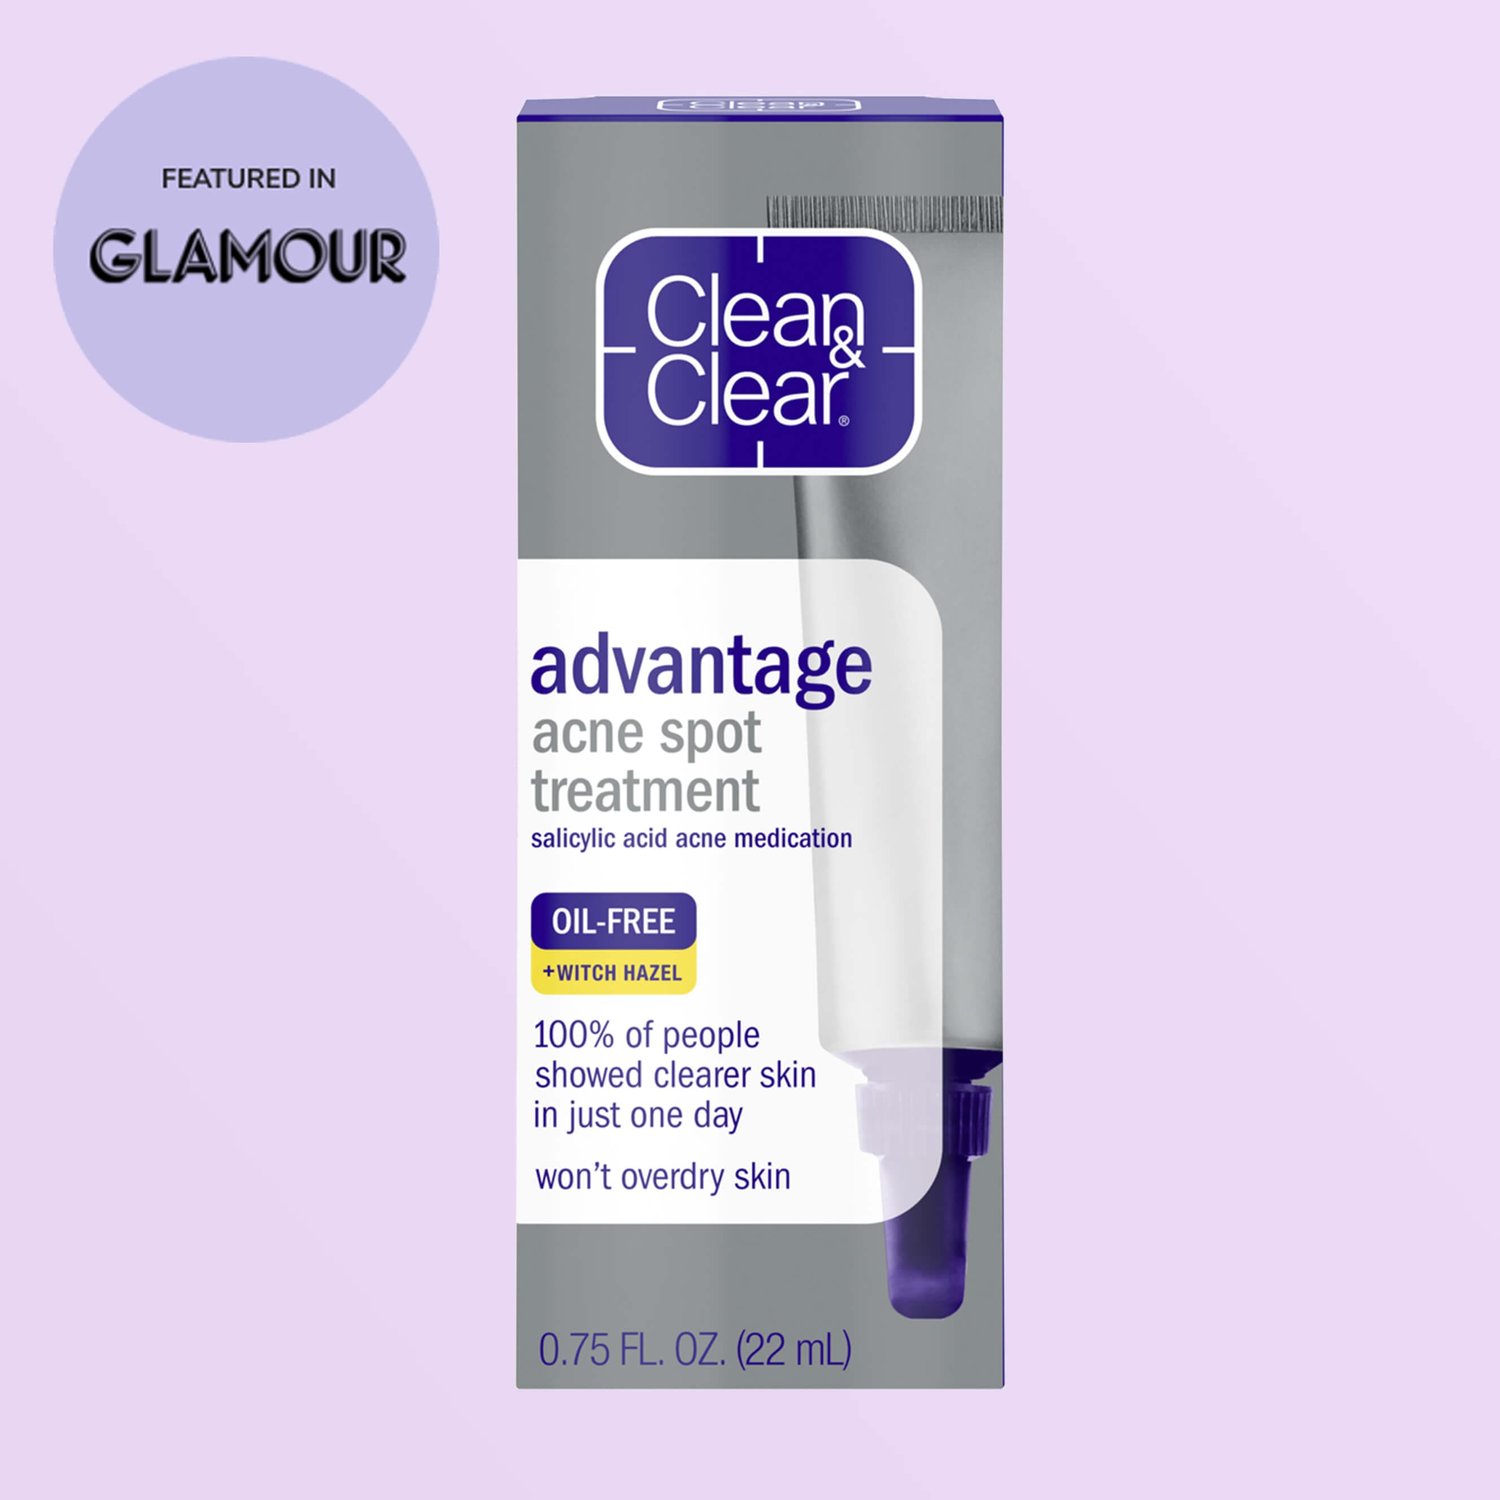 Clean & Clear Advantage Acne Spot Treatment Gel Cream with 2% Salicylic Acid Acne Medication